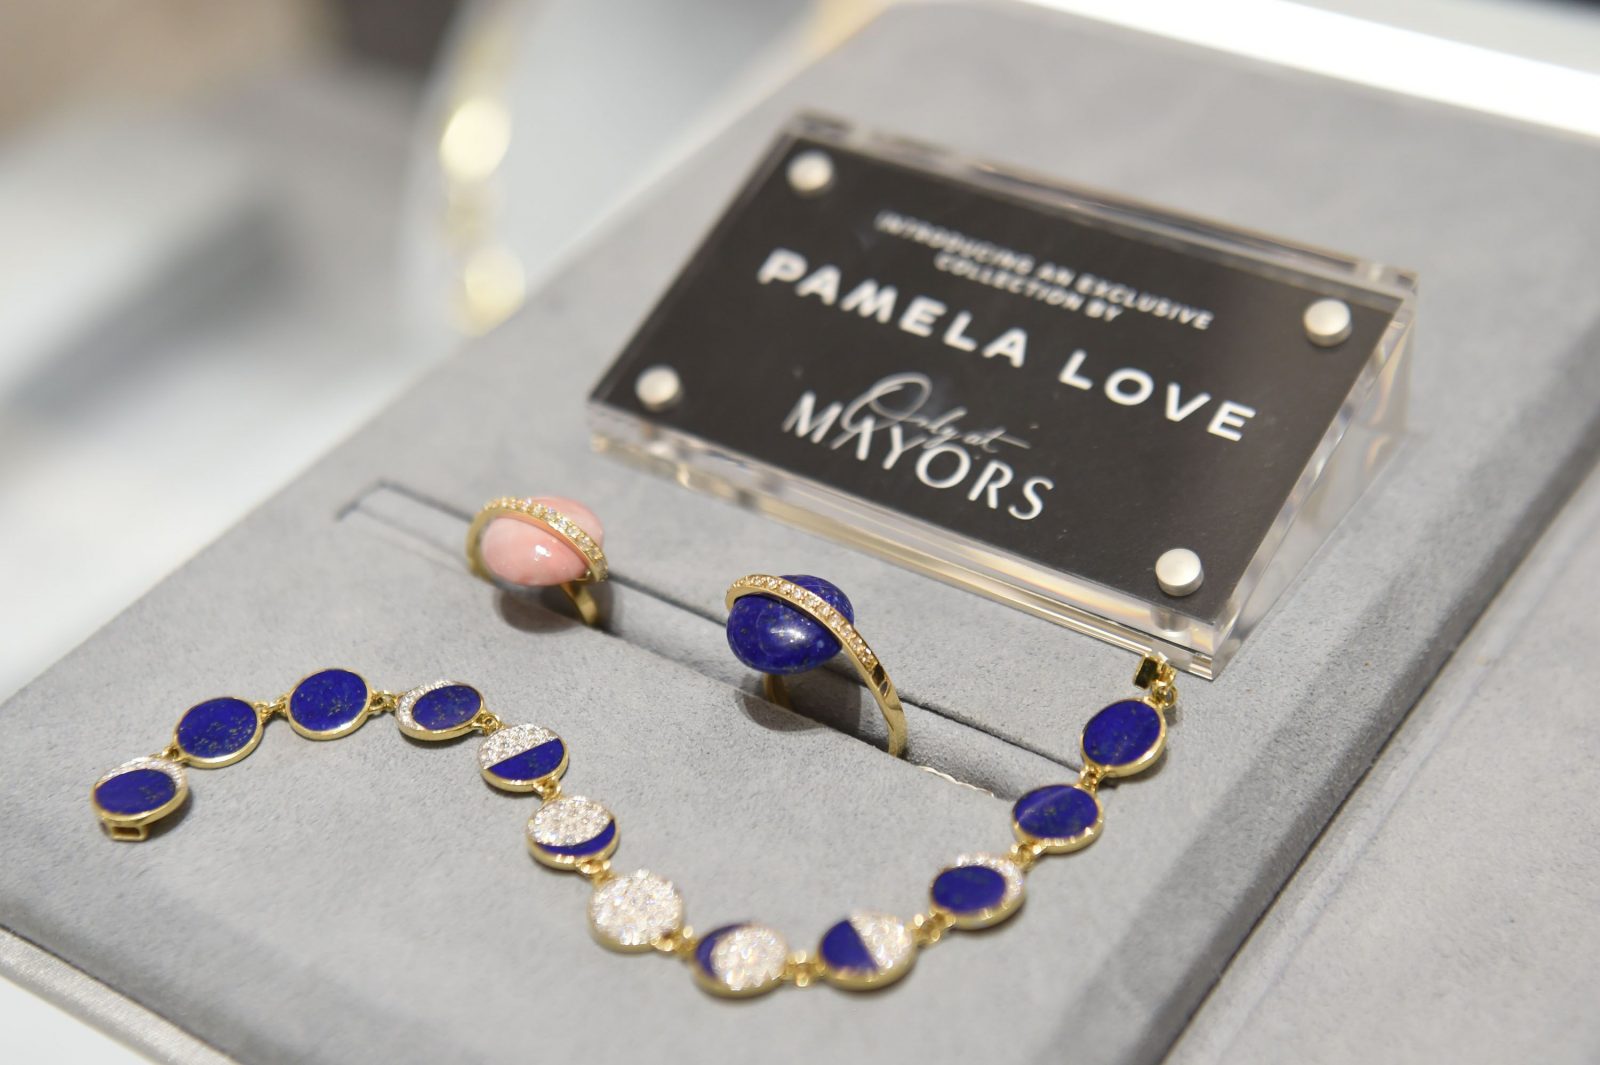 Pamela Love, Jewelry, Vitaly Italy Astronaut Pendant Necklace Silver Tone